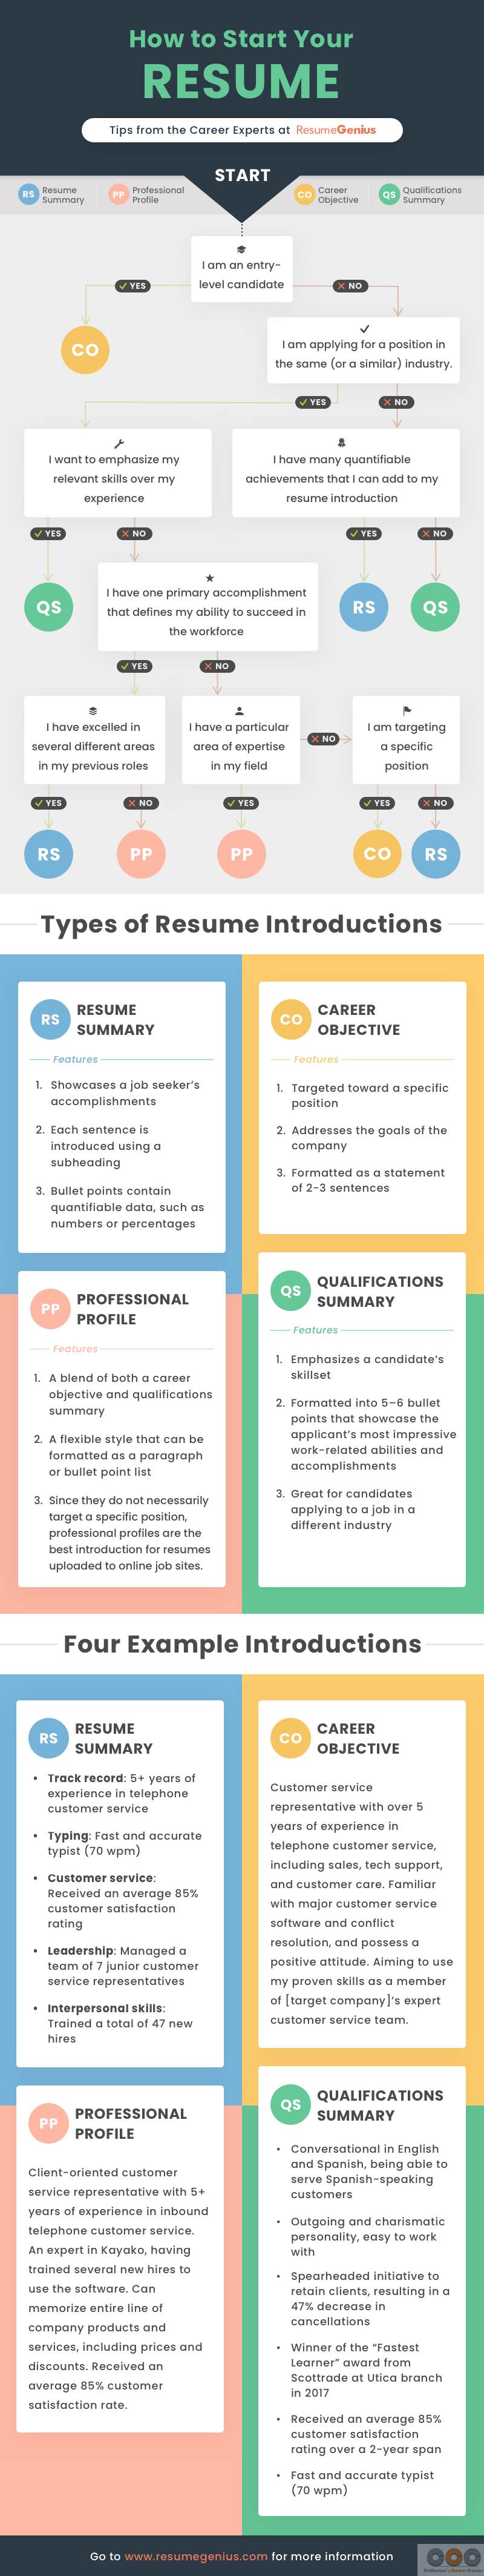 How to write a winning resume